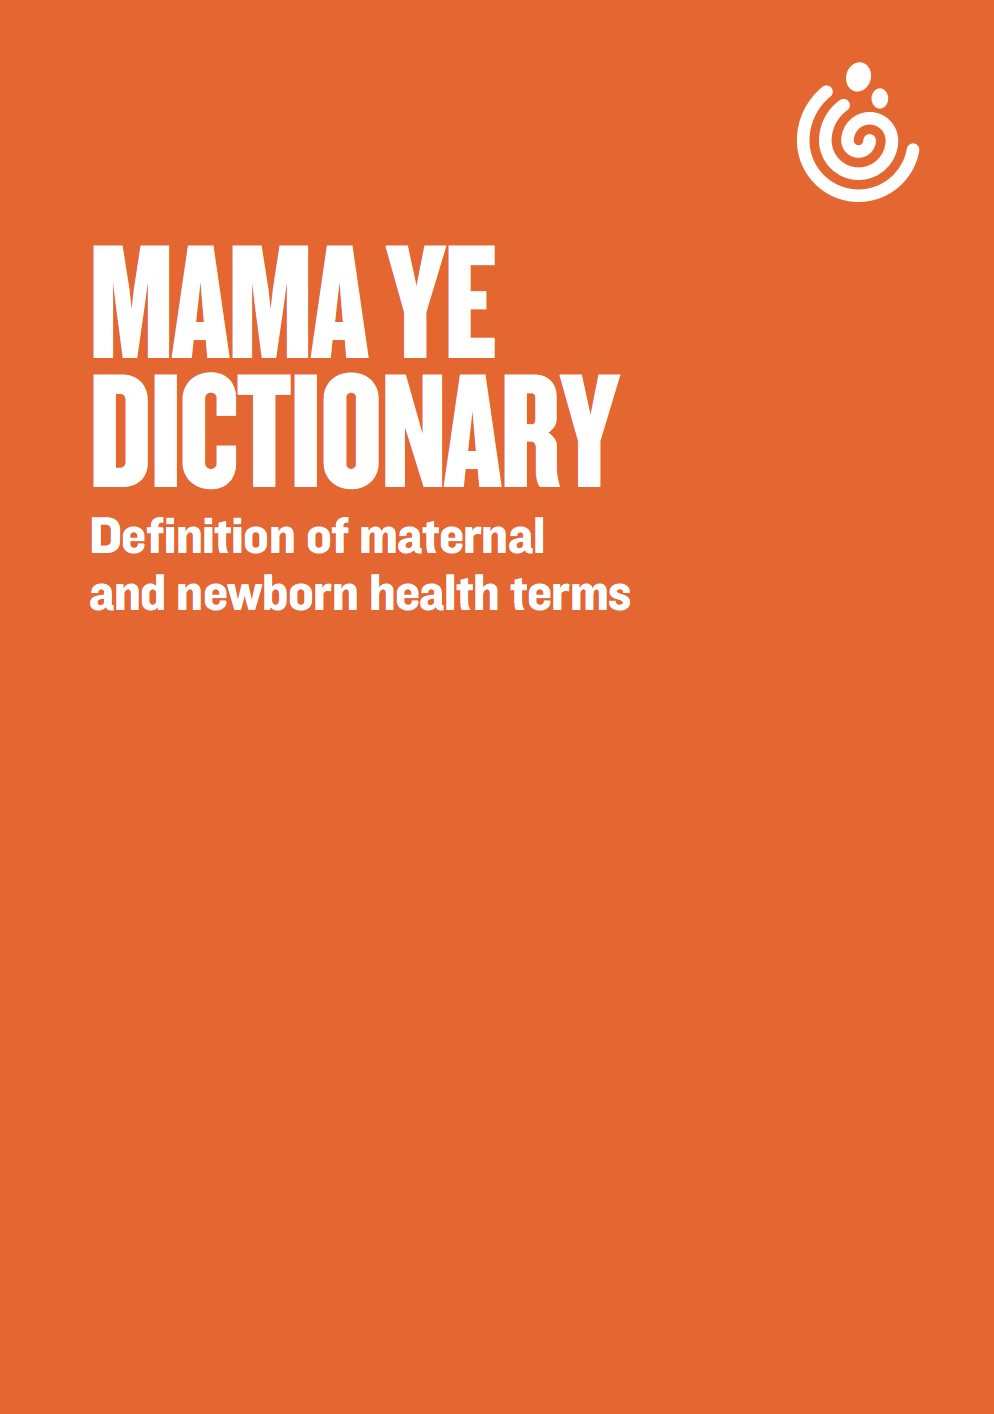 Tanzania dictionary maternal and newborn health